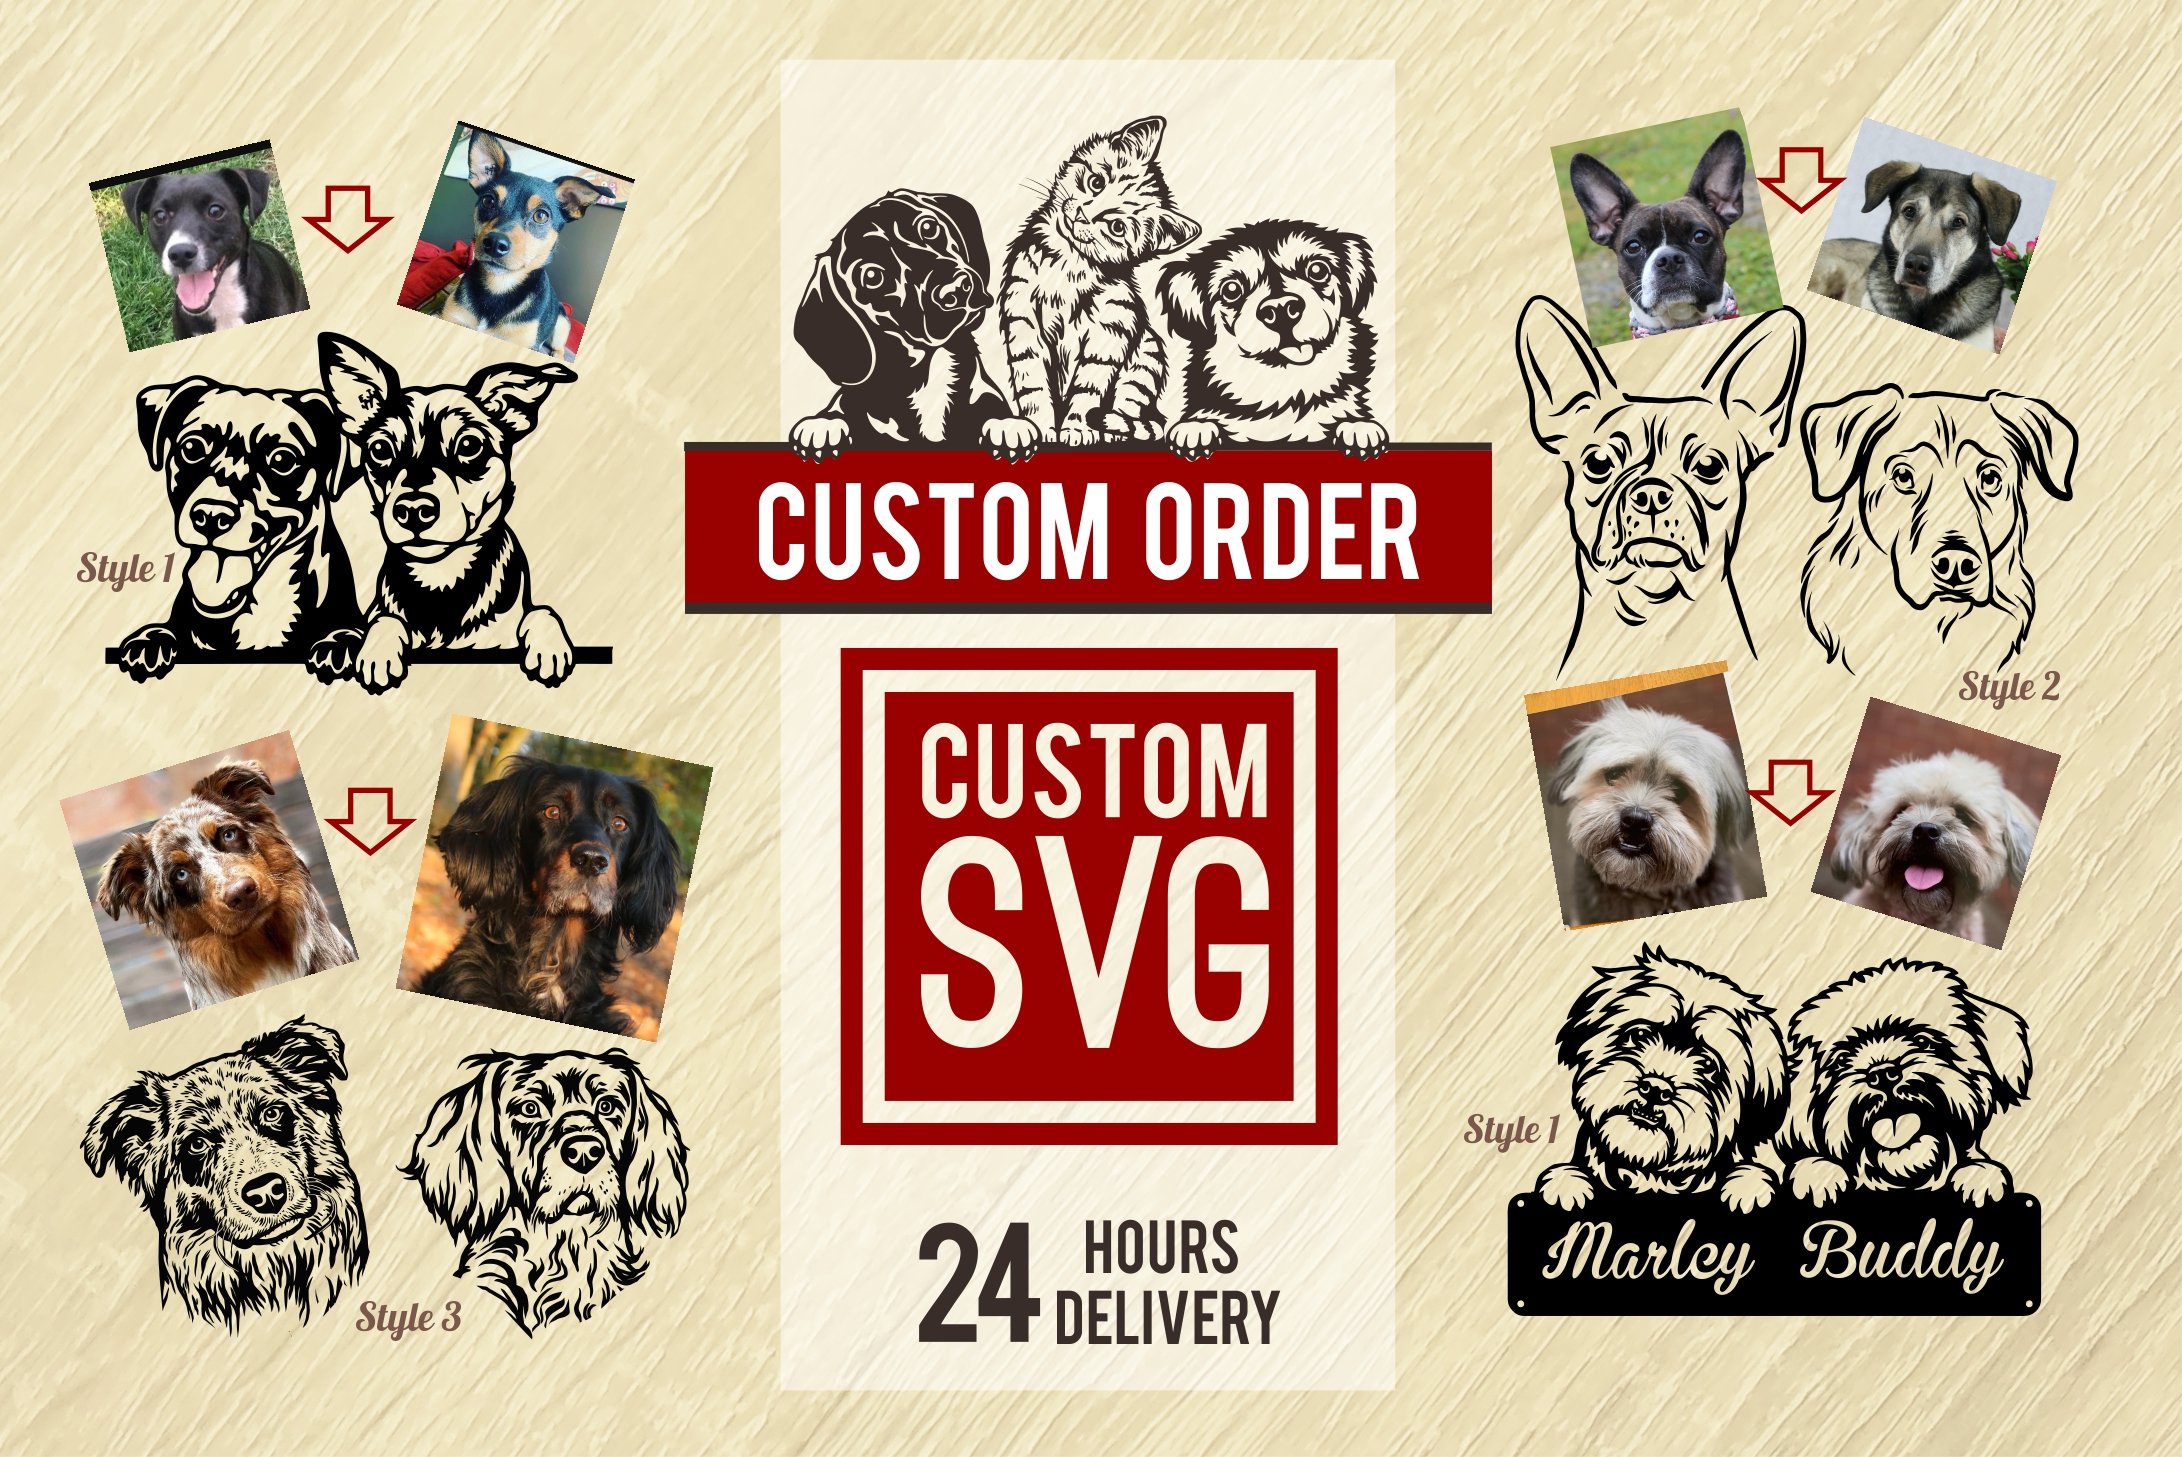 pets custom order service 281229 322